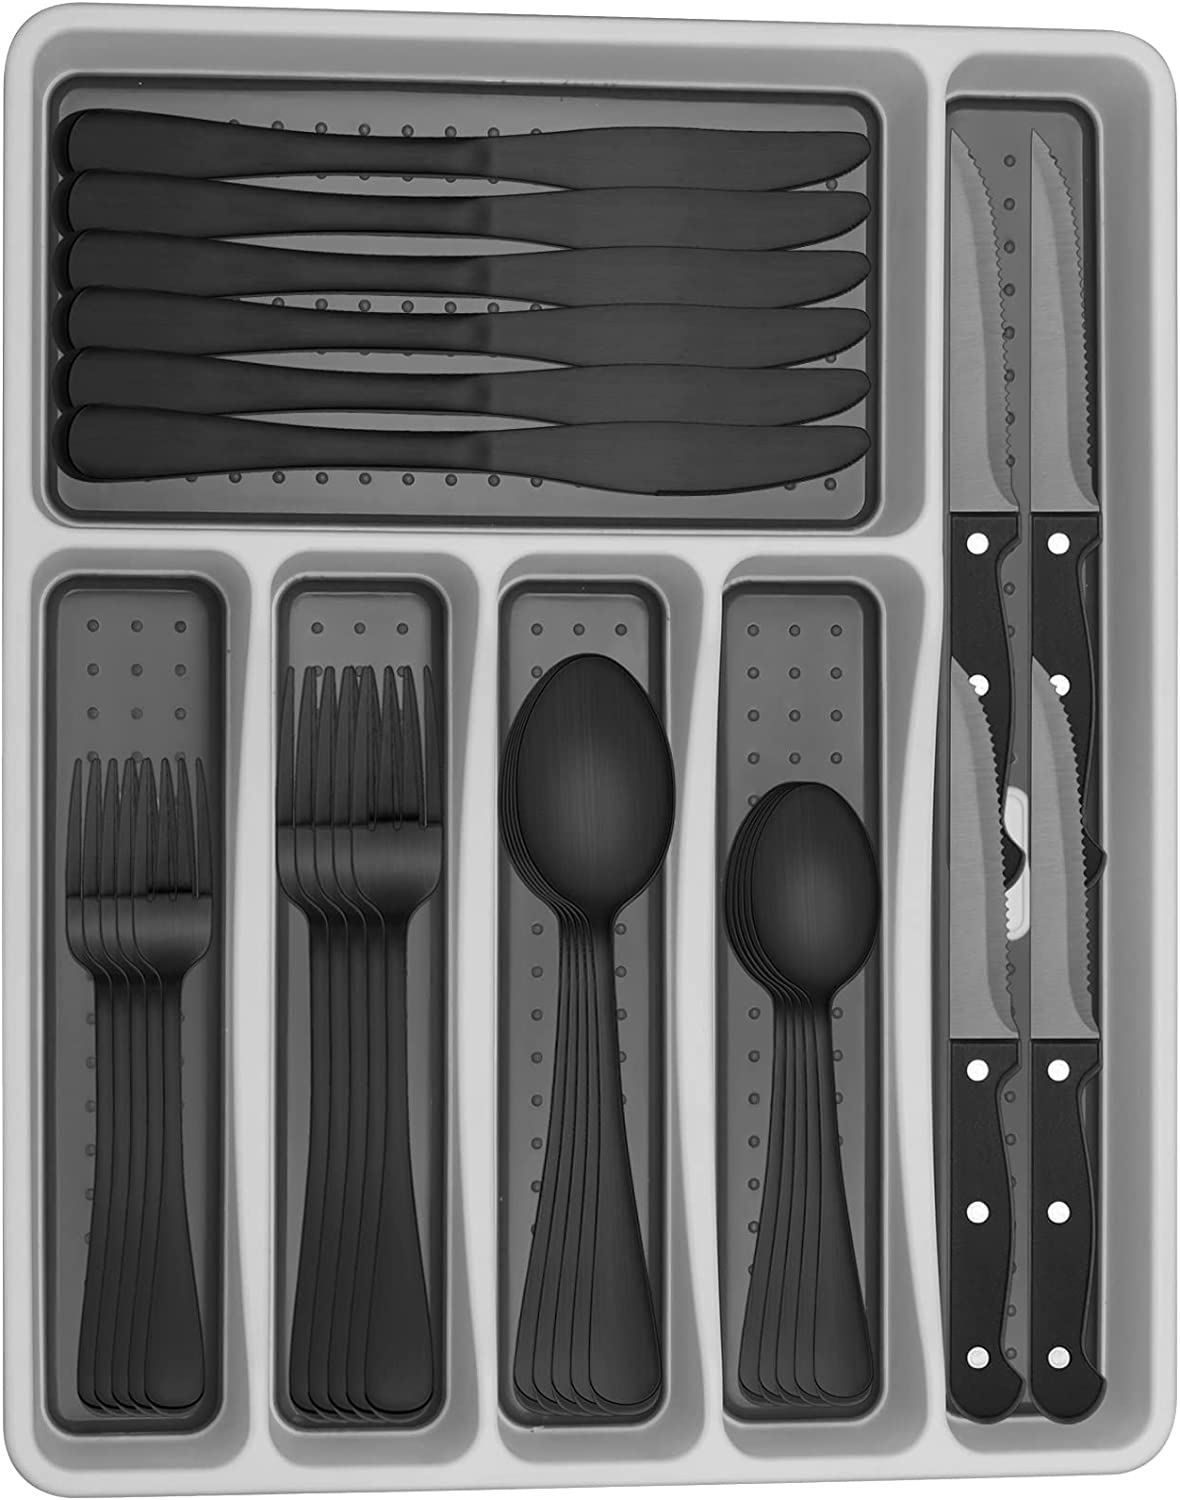  HIWARE 48-Piece Silverware Set with Steak Knives for 8,  Stainless Steel Flatware Cutlery Set For Home Kitchen Restaurant Hotel,  Kitchen Utensils Set, Mirror Polished, Dishwasher Safe: Home & Kitchen